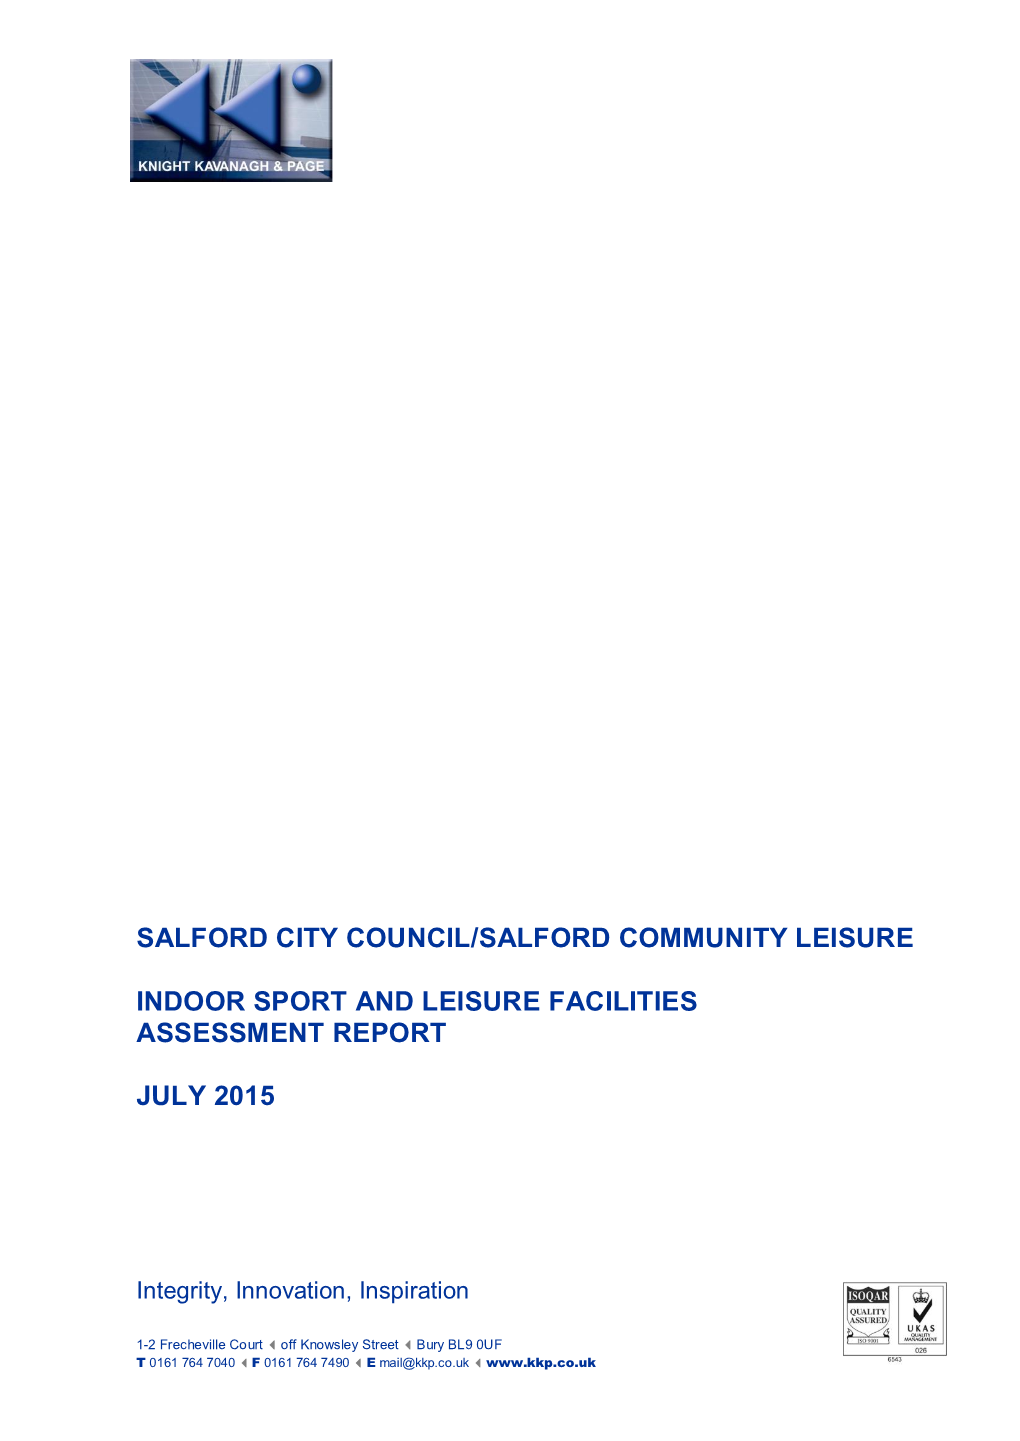 KKP Indoor Sport and Leisure Facilities Assessment Report.Pdf